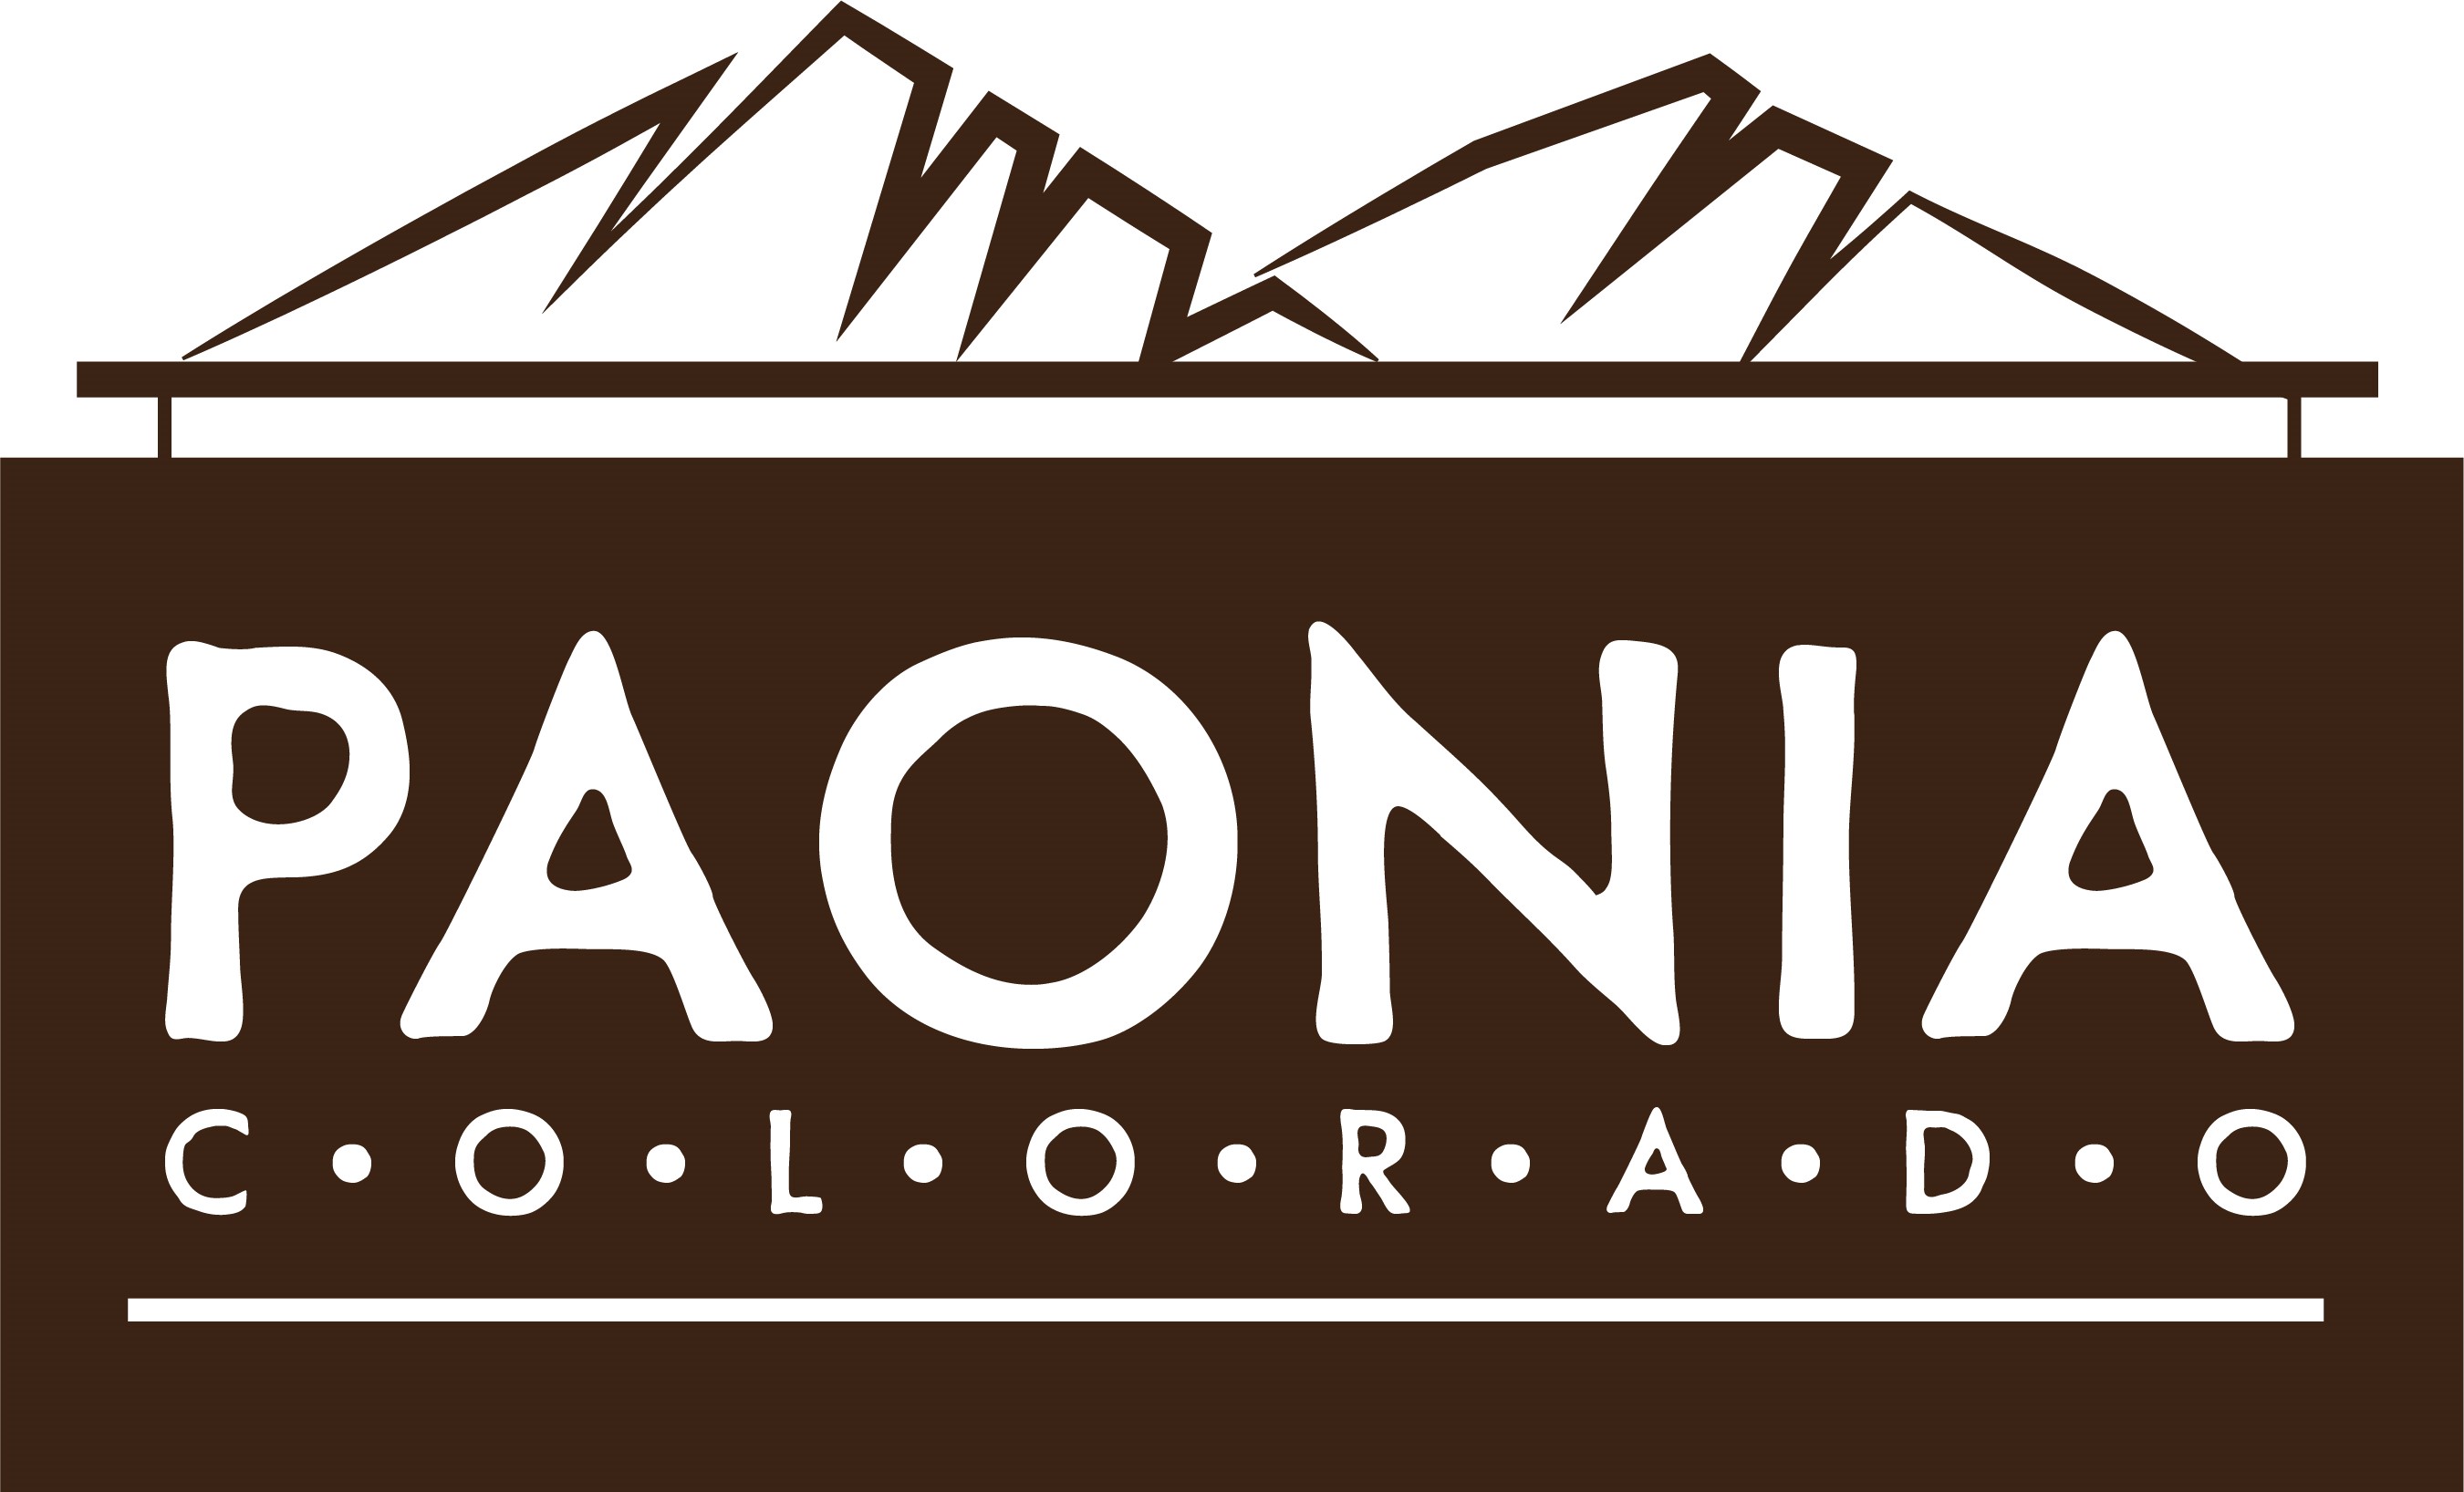 Organization logo of Town of Paonia